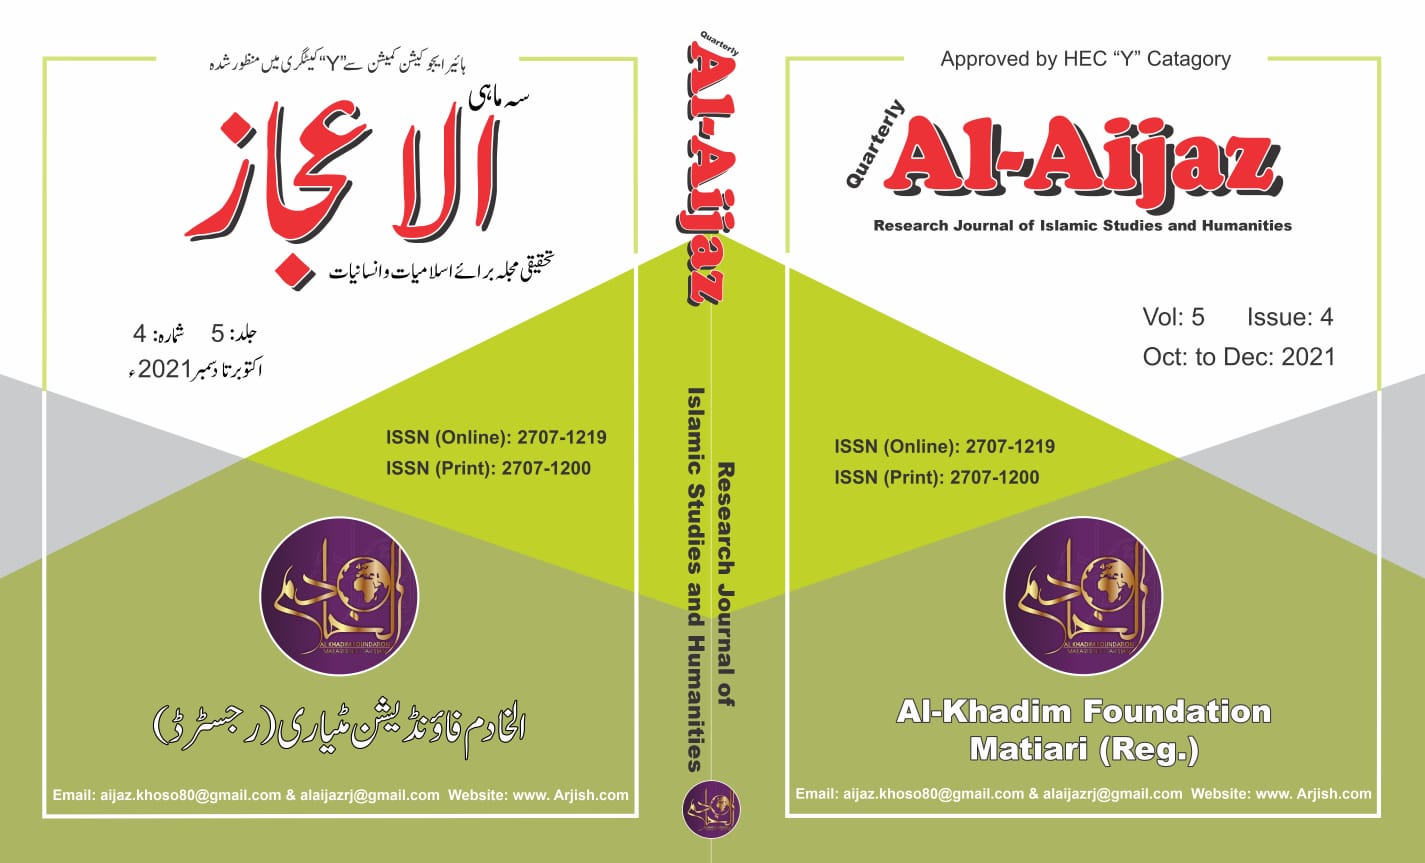 					View Vol. 5 No. 4 (2021): Al-Aijaz Research Journal of Islamic Studies & Humanities (October to December 2021)
				